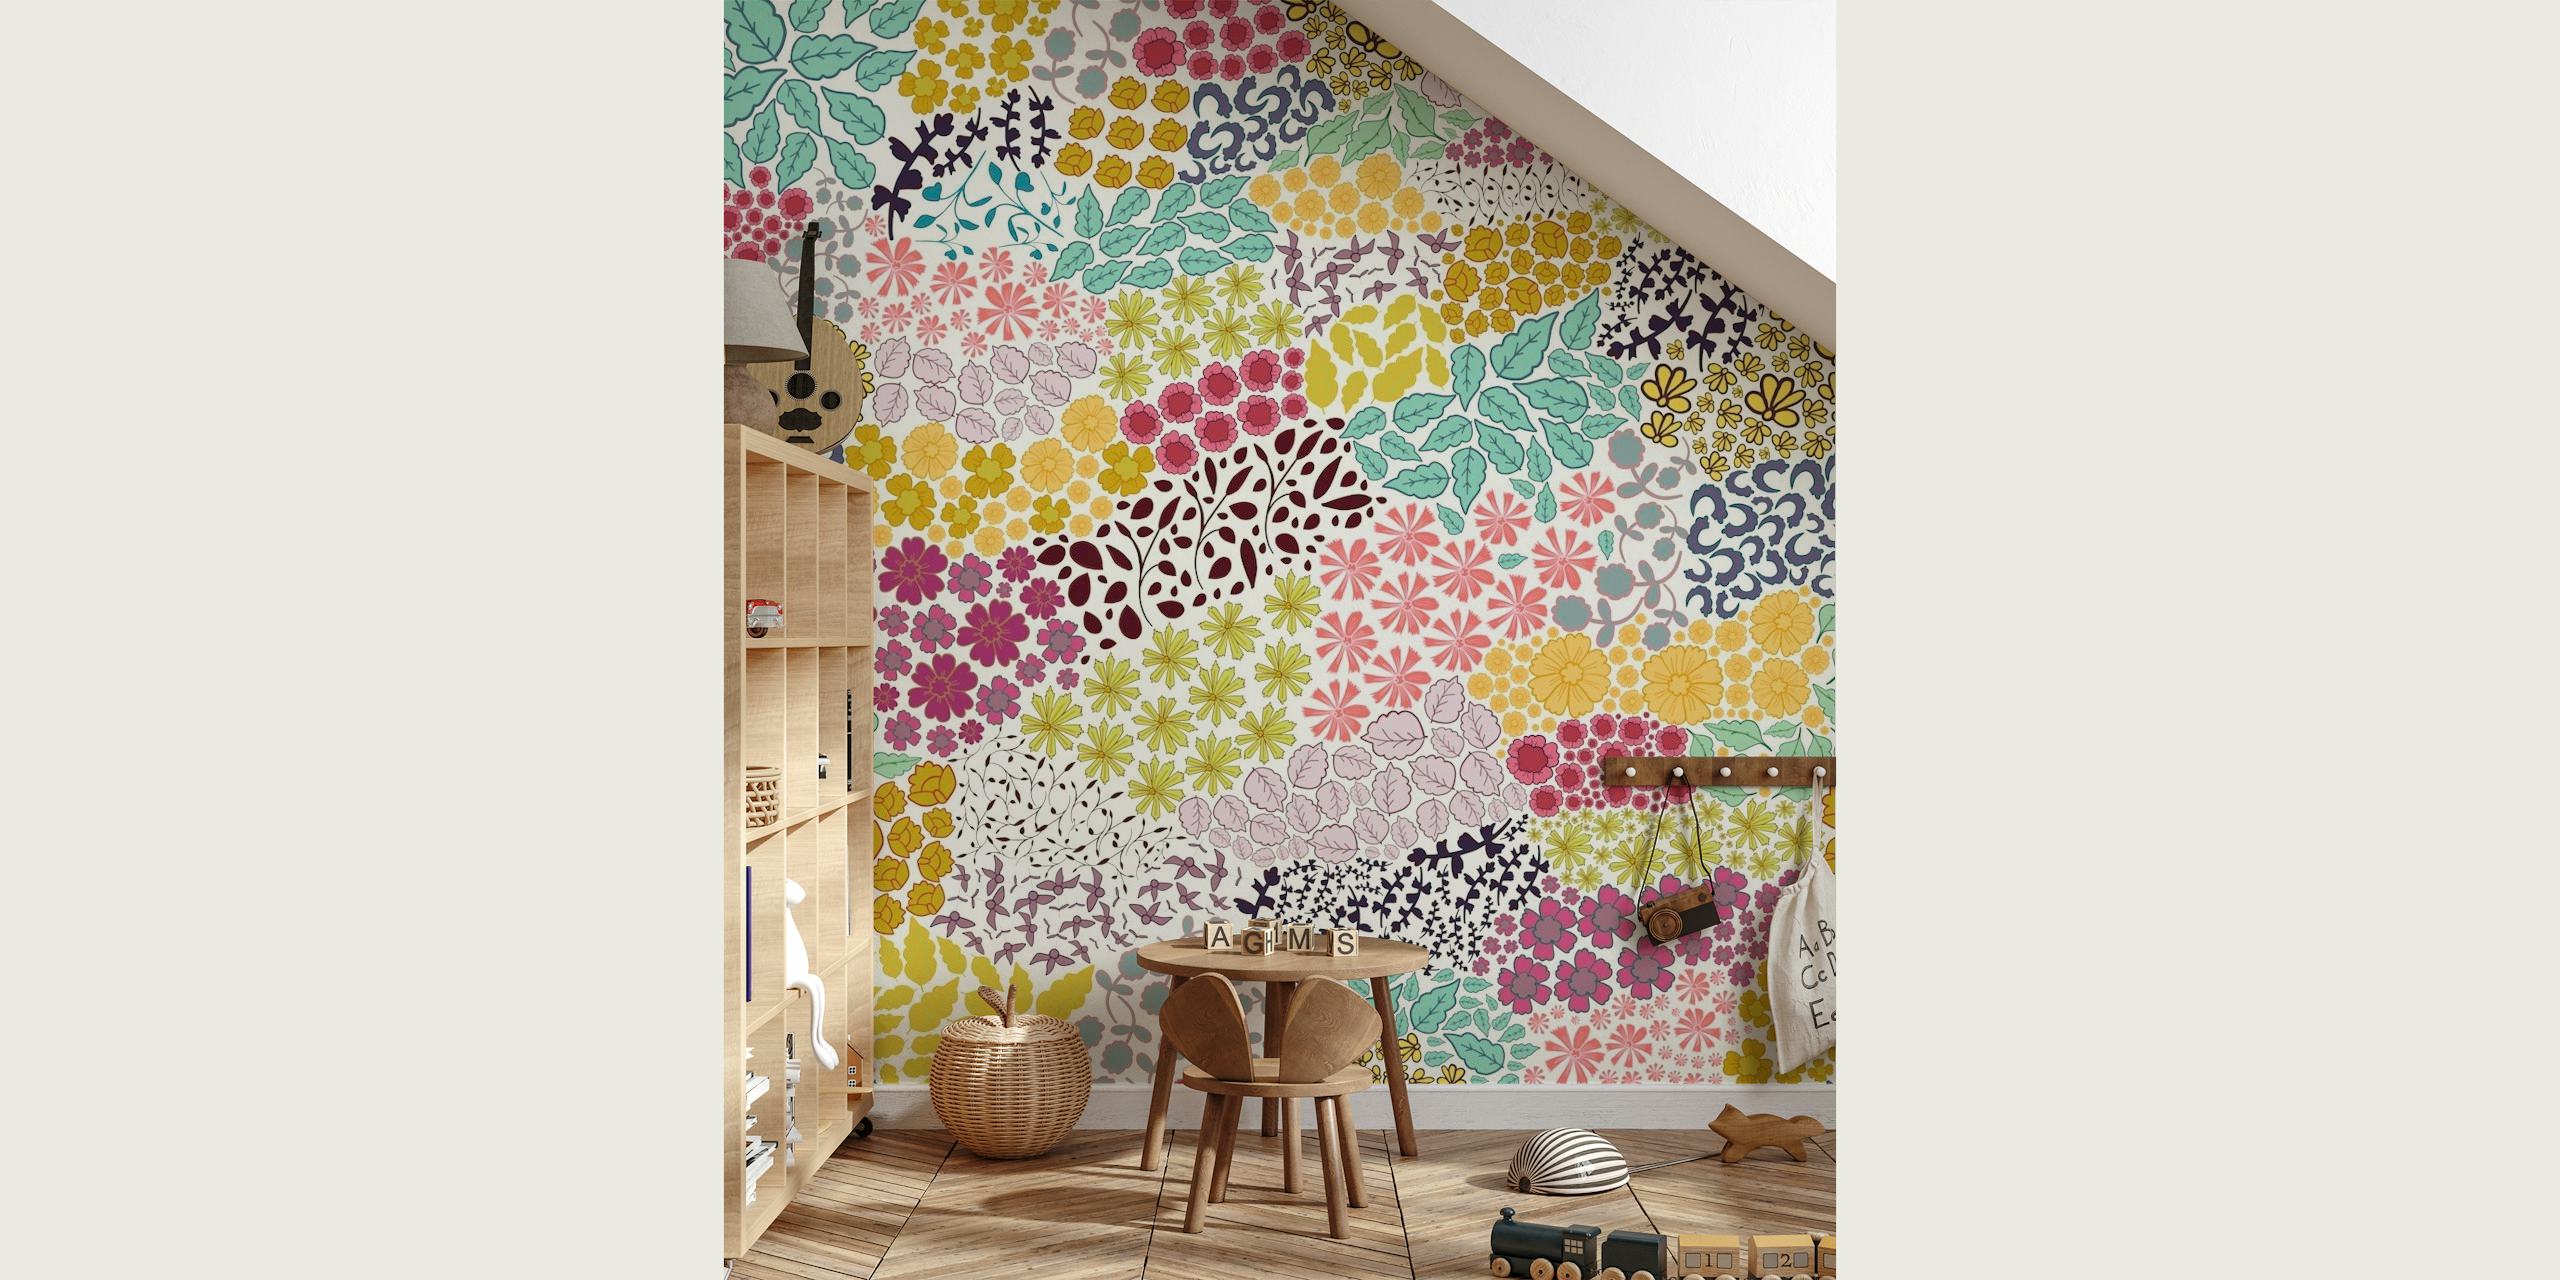 Colorful hand drawn ditsy wallpaper